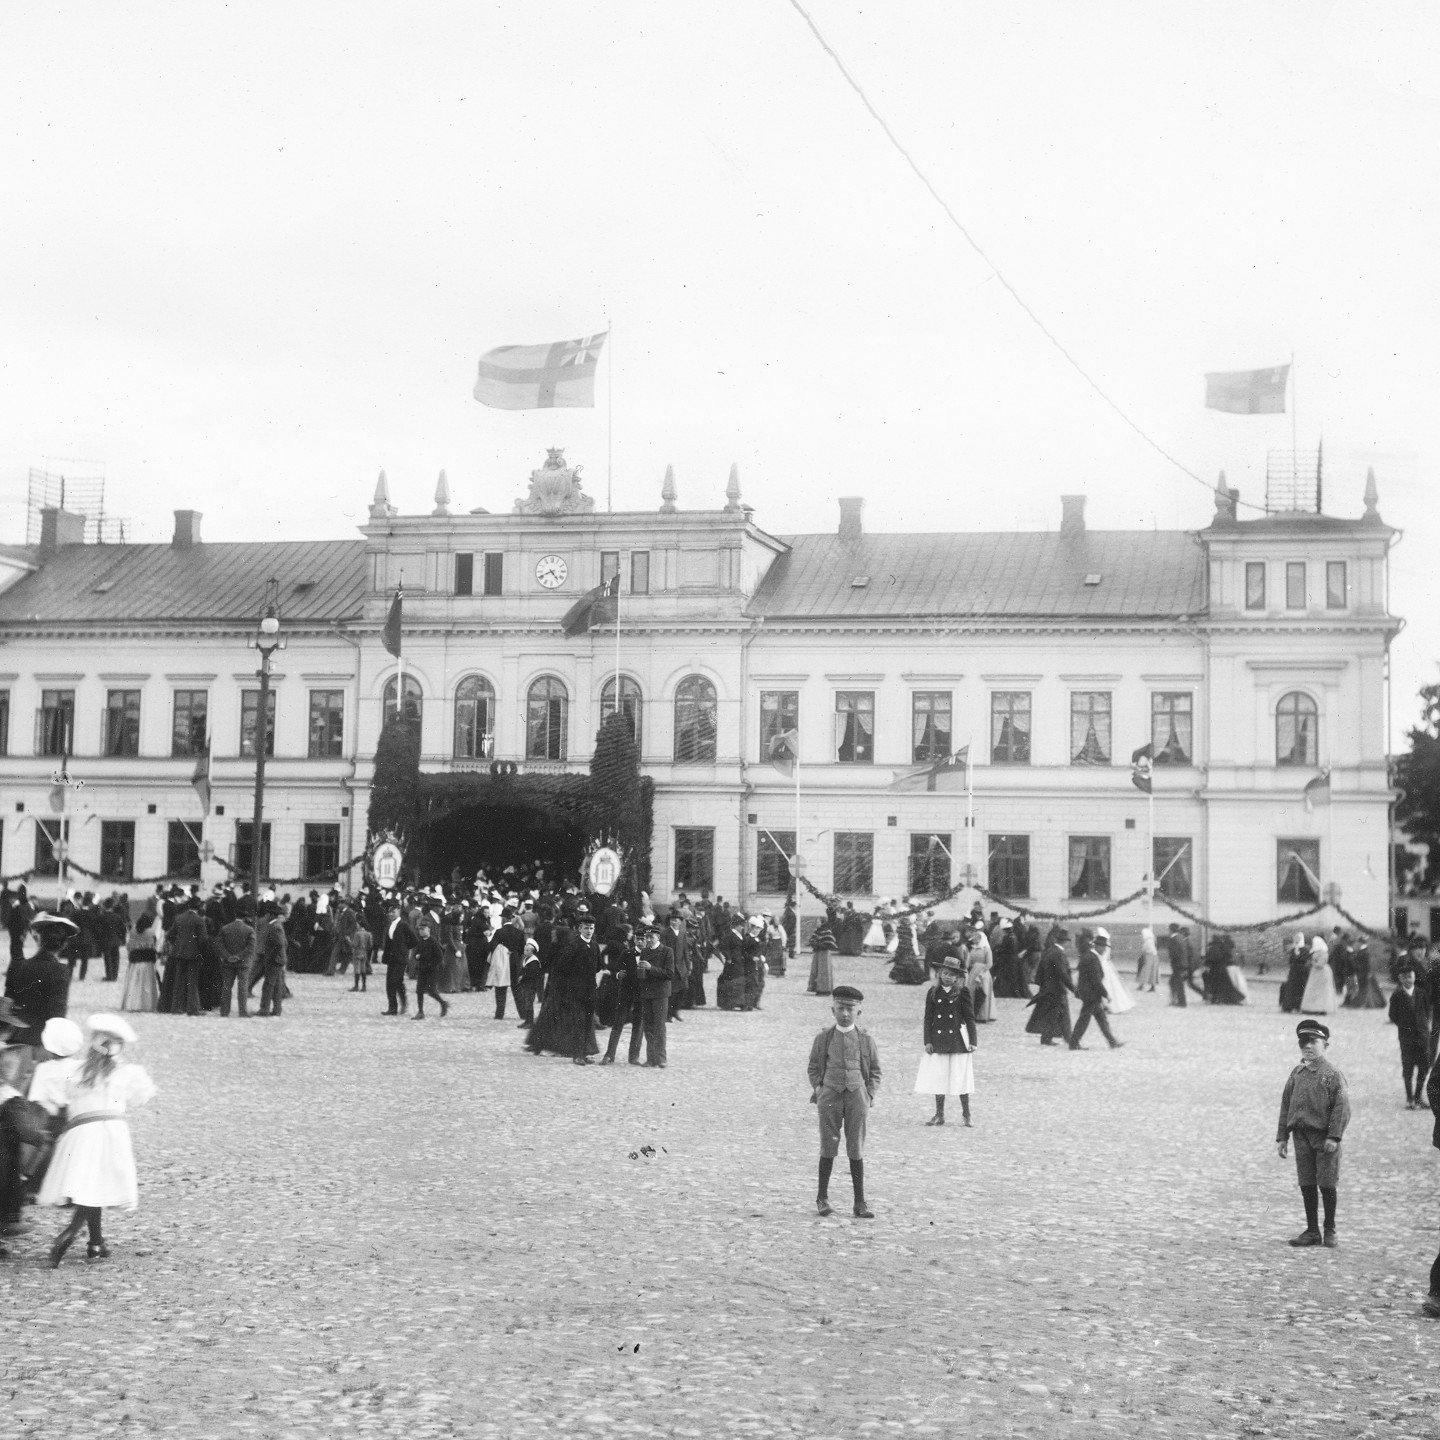 Black and white photo of the Elite Stadshotellet in Växjö